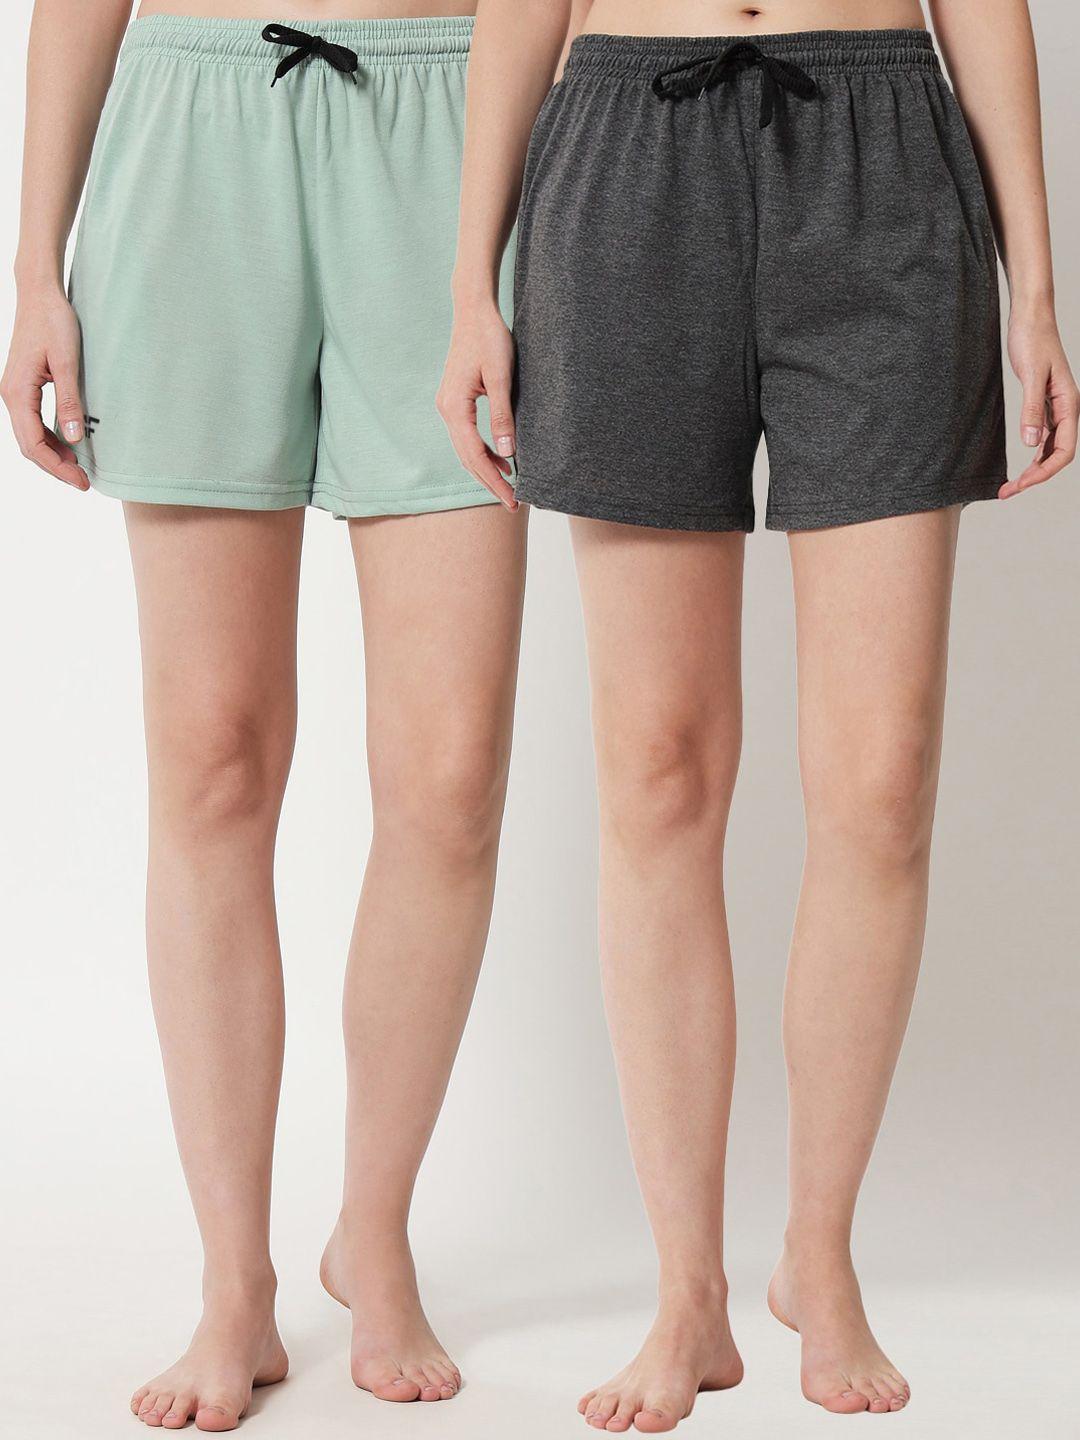 fflirtygo women charcoal shorts